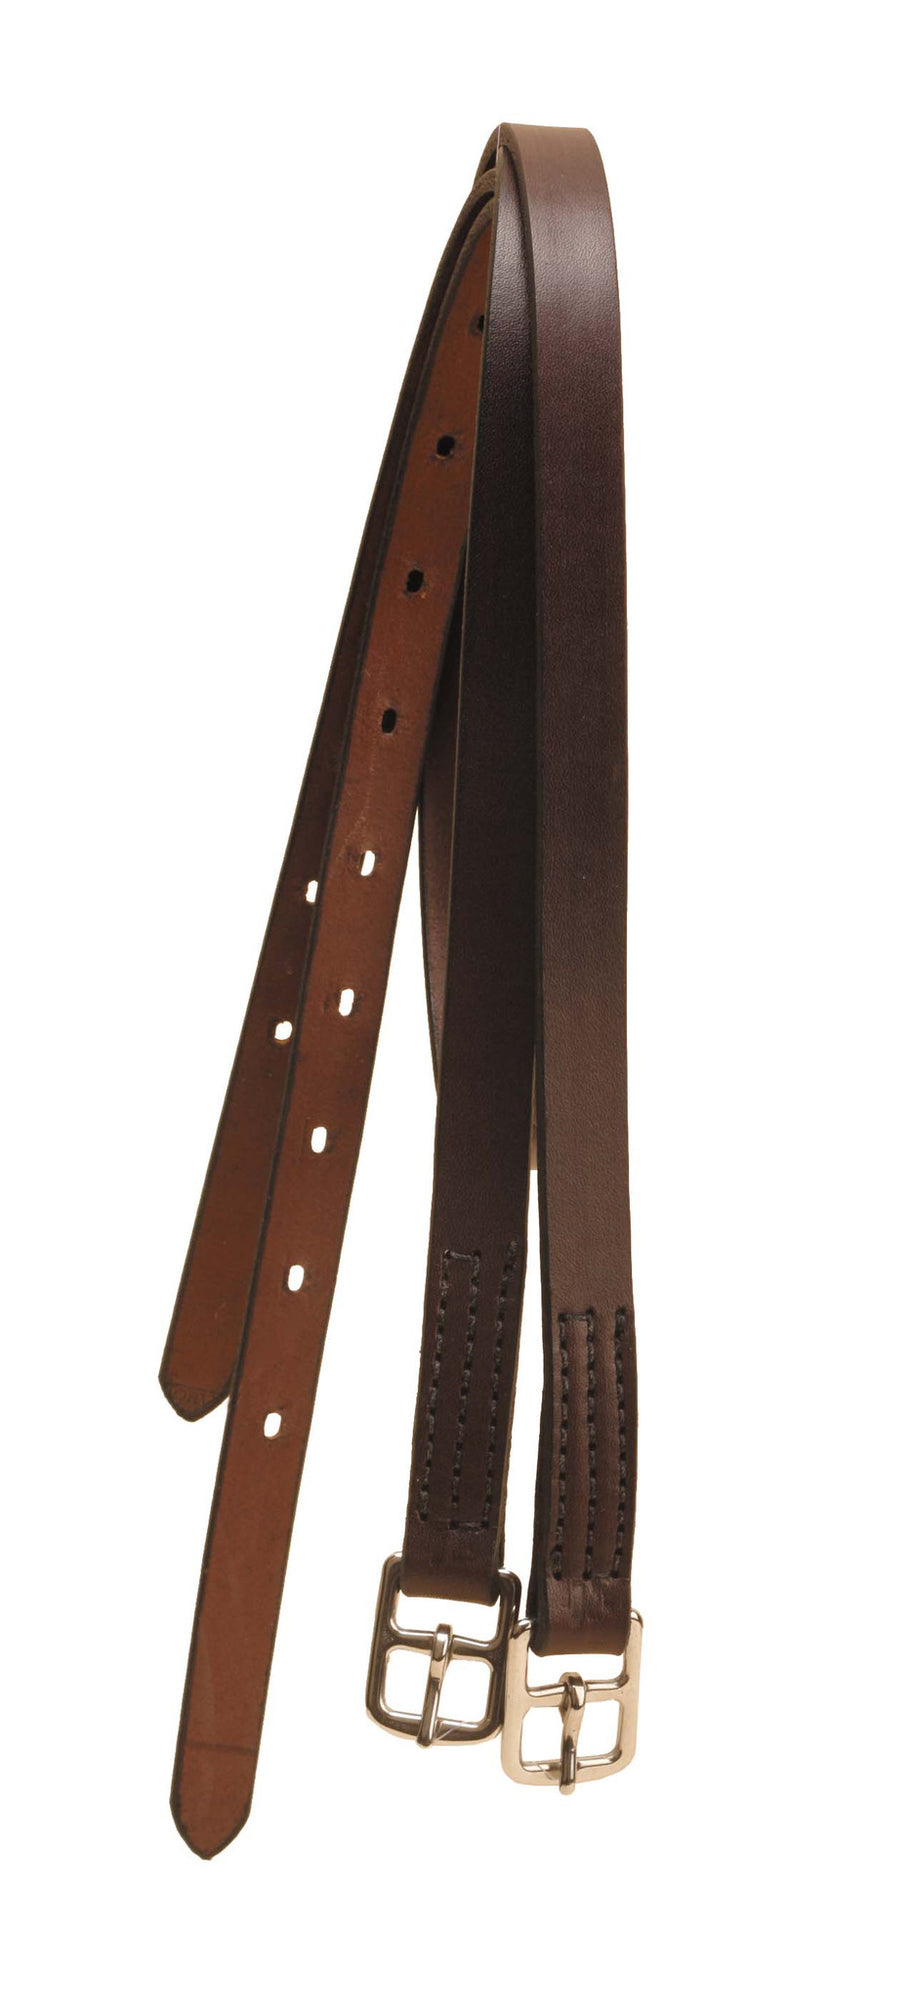 Tory Leather 3/4" x 48" Child's Stirrup Leathers